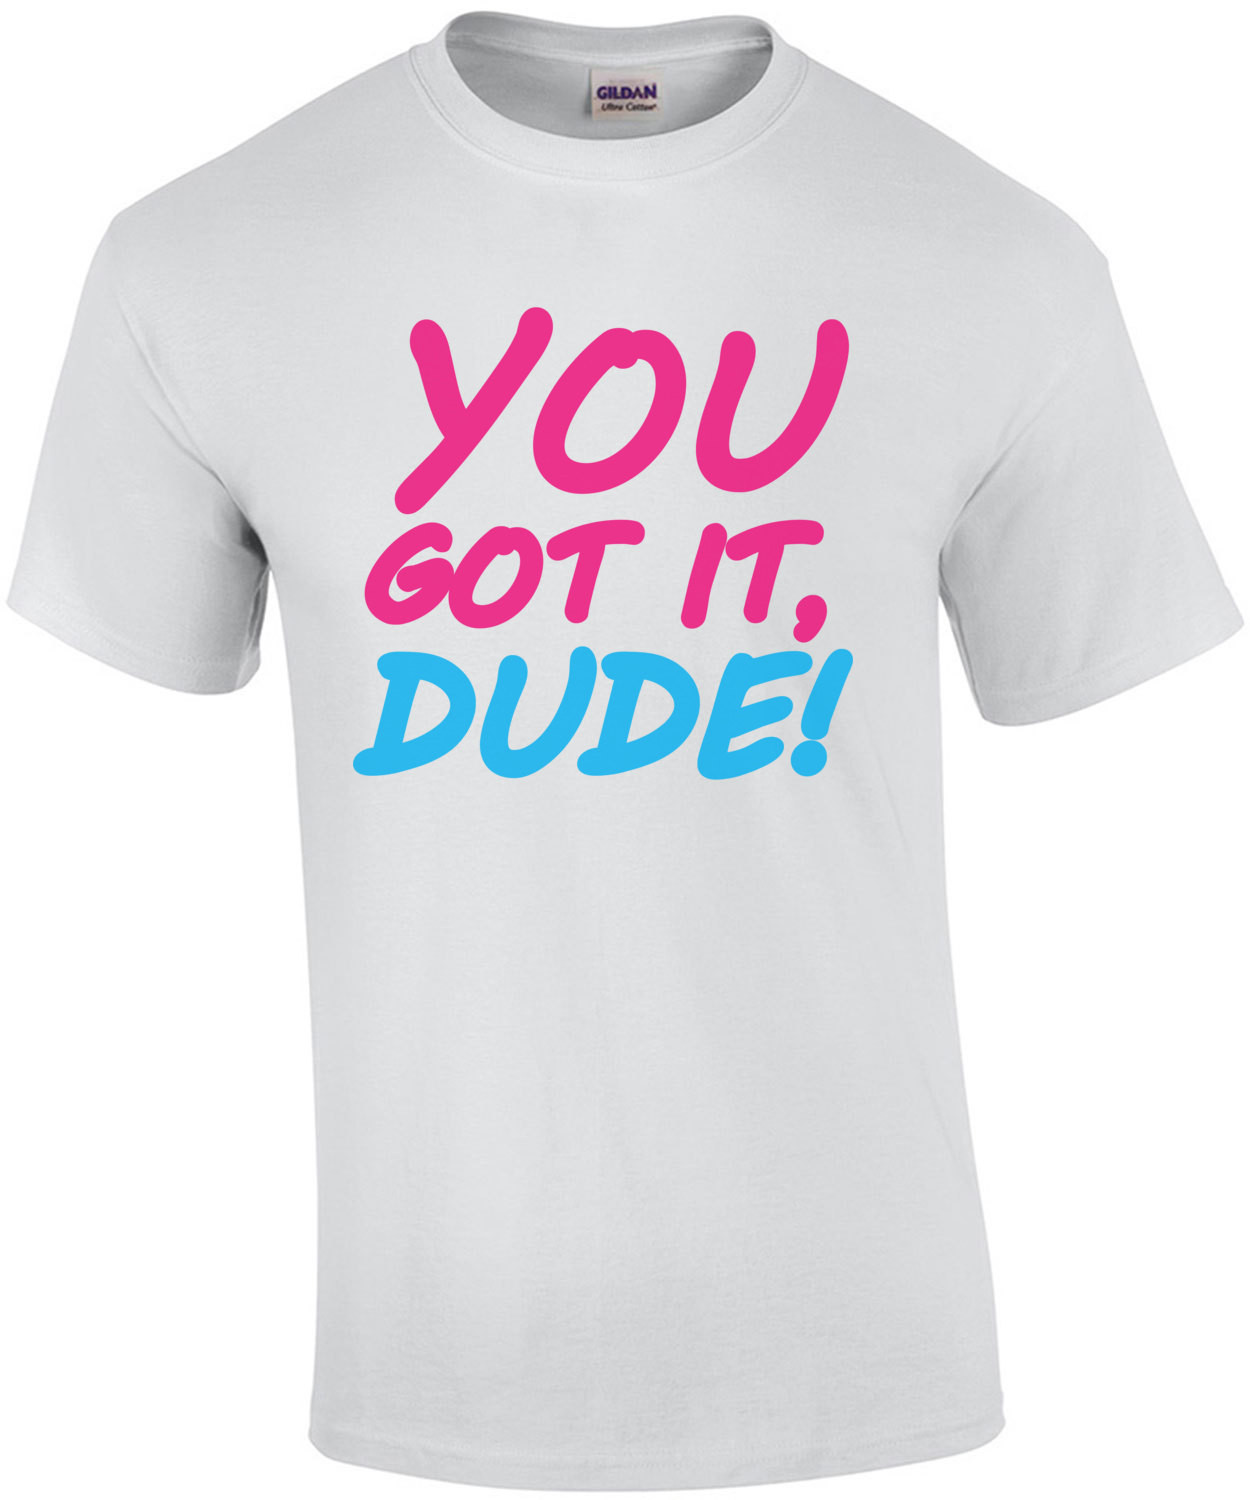 You got it, dude! Full House T-Shirt 90's T-Shirt